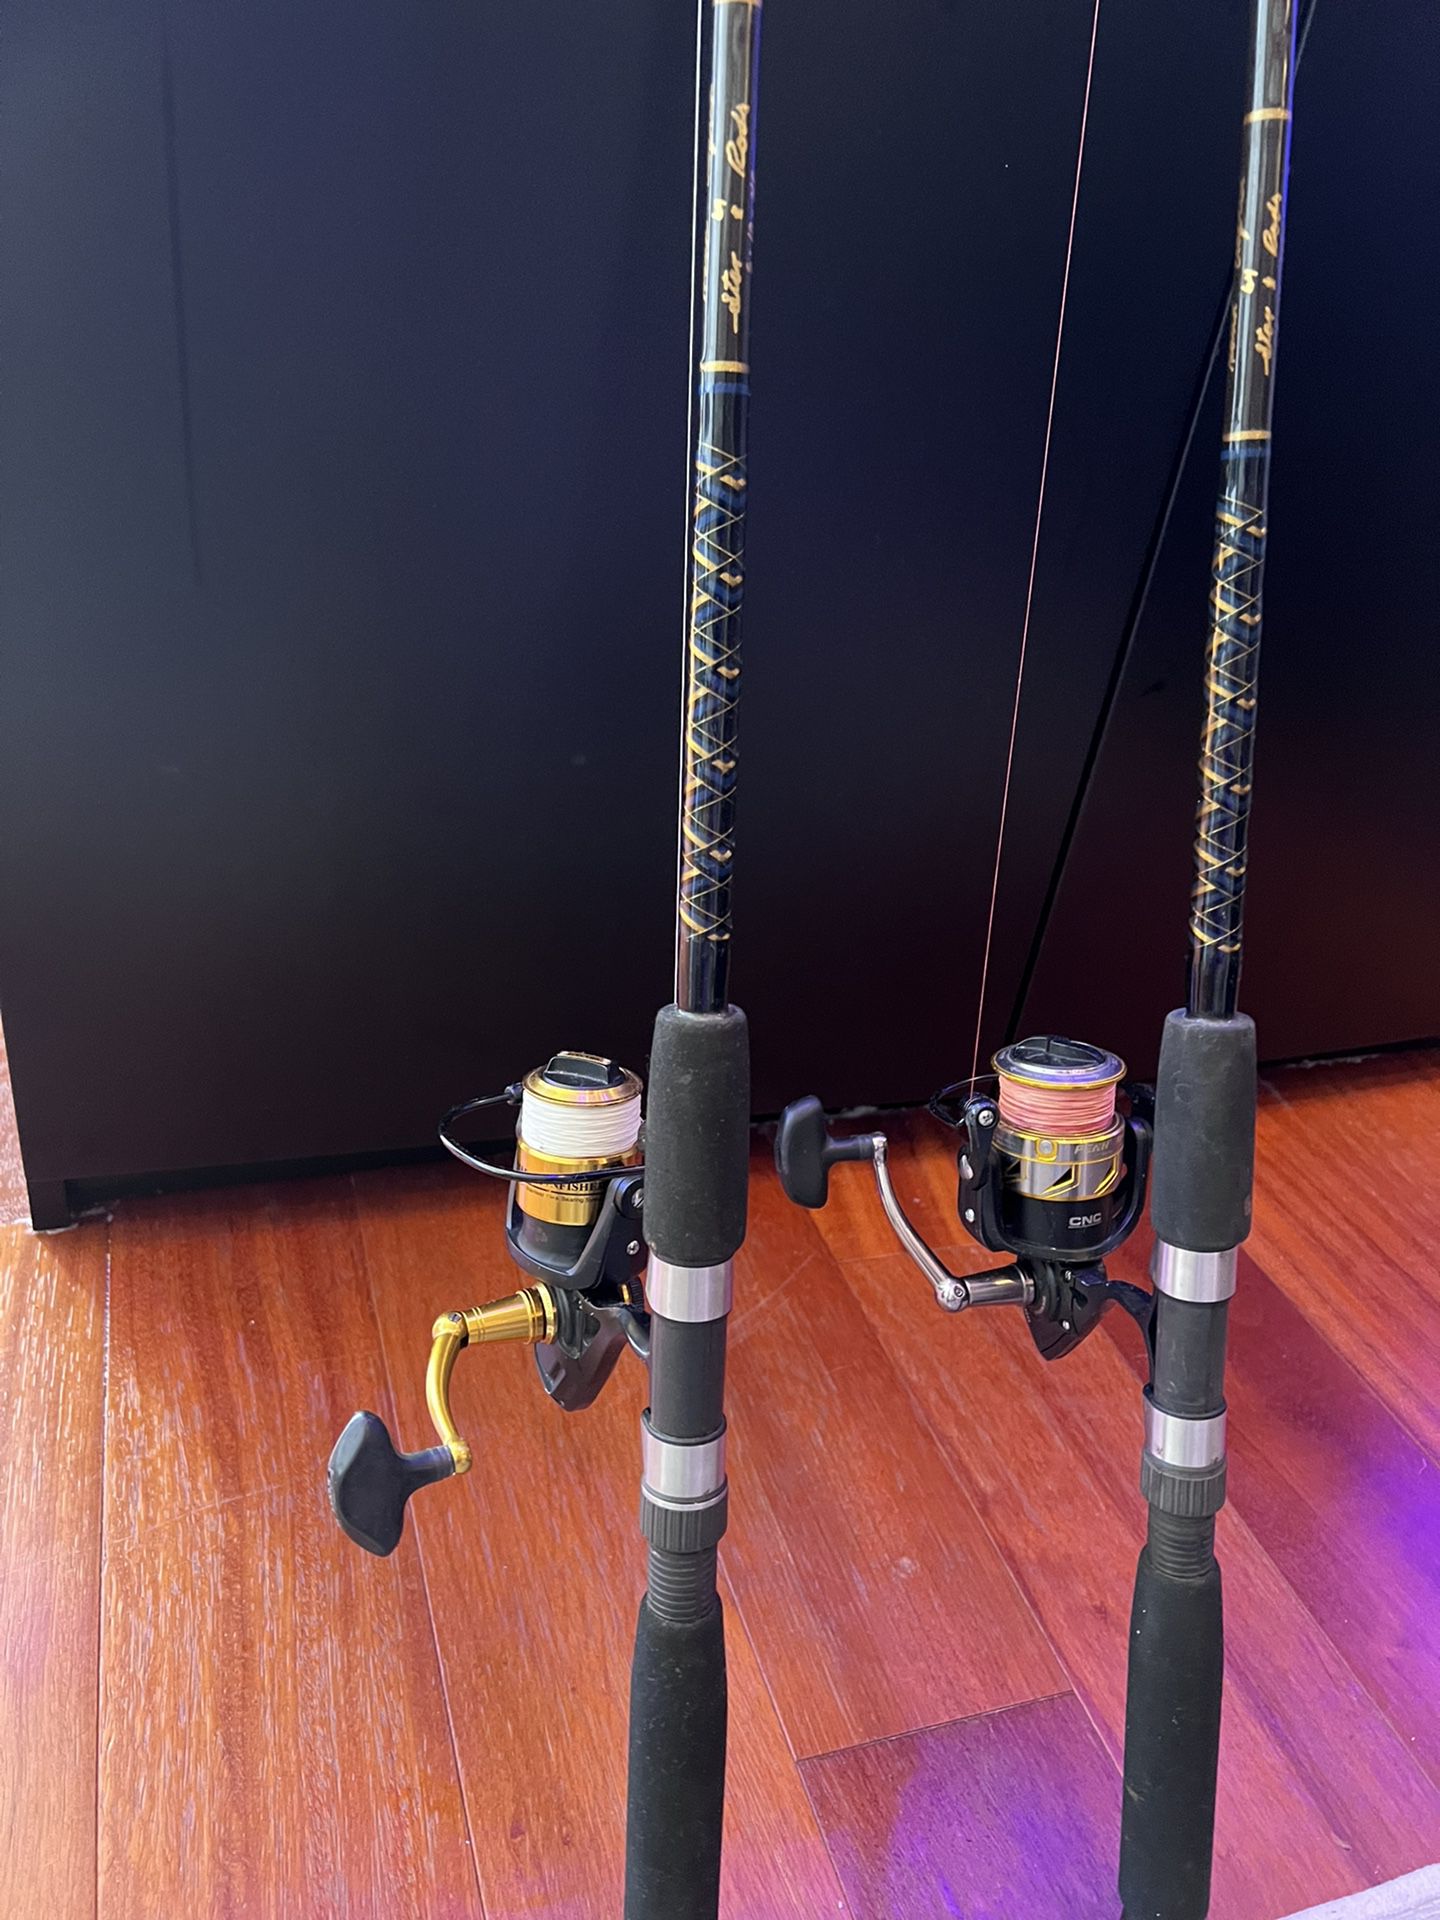 Fishing Poles 